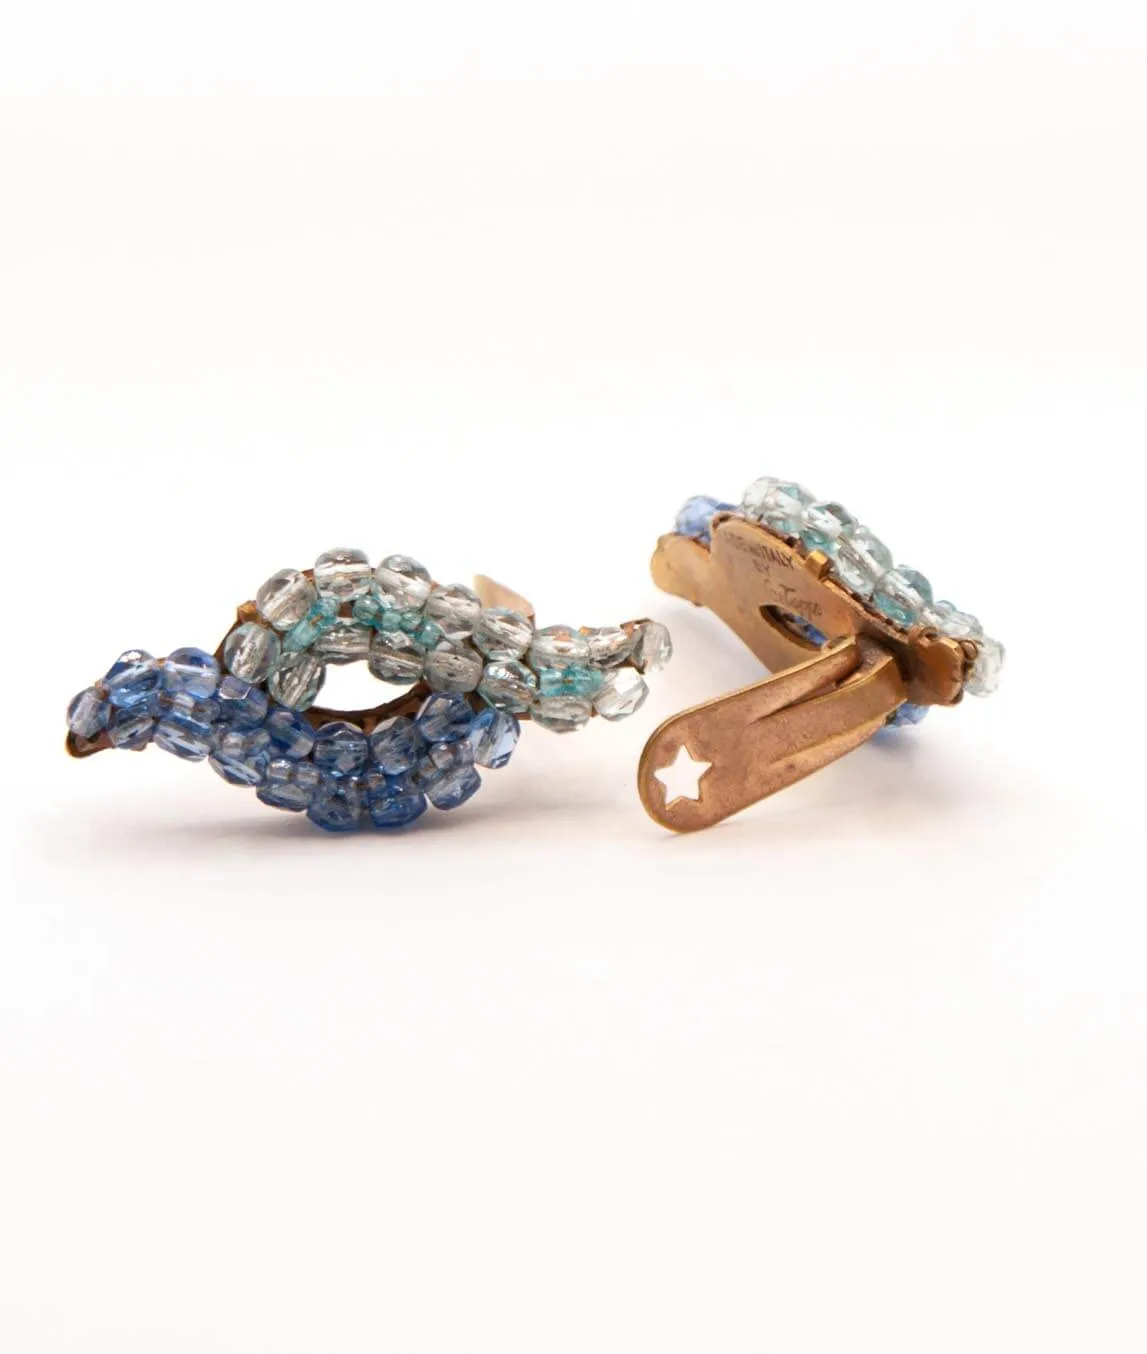 Coppola e Toppo beaded earrings in shades of blue and aqua